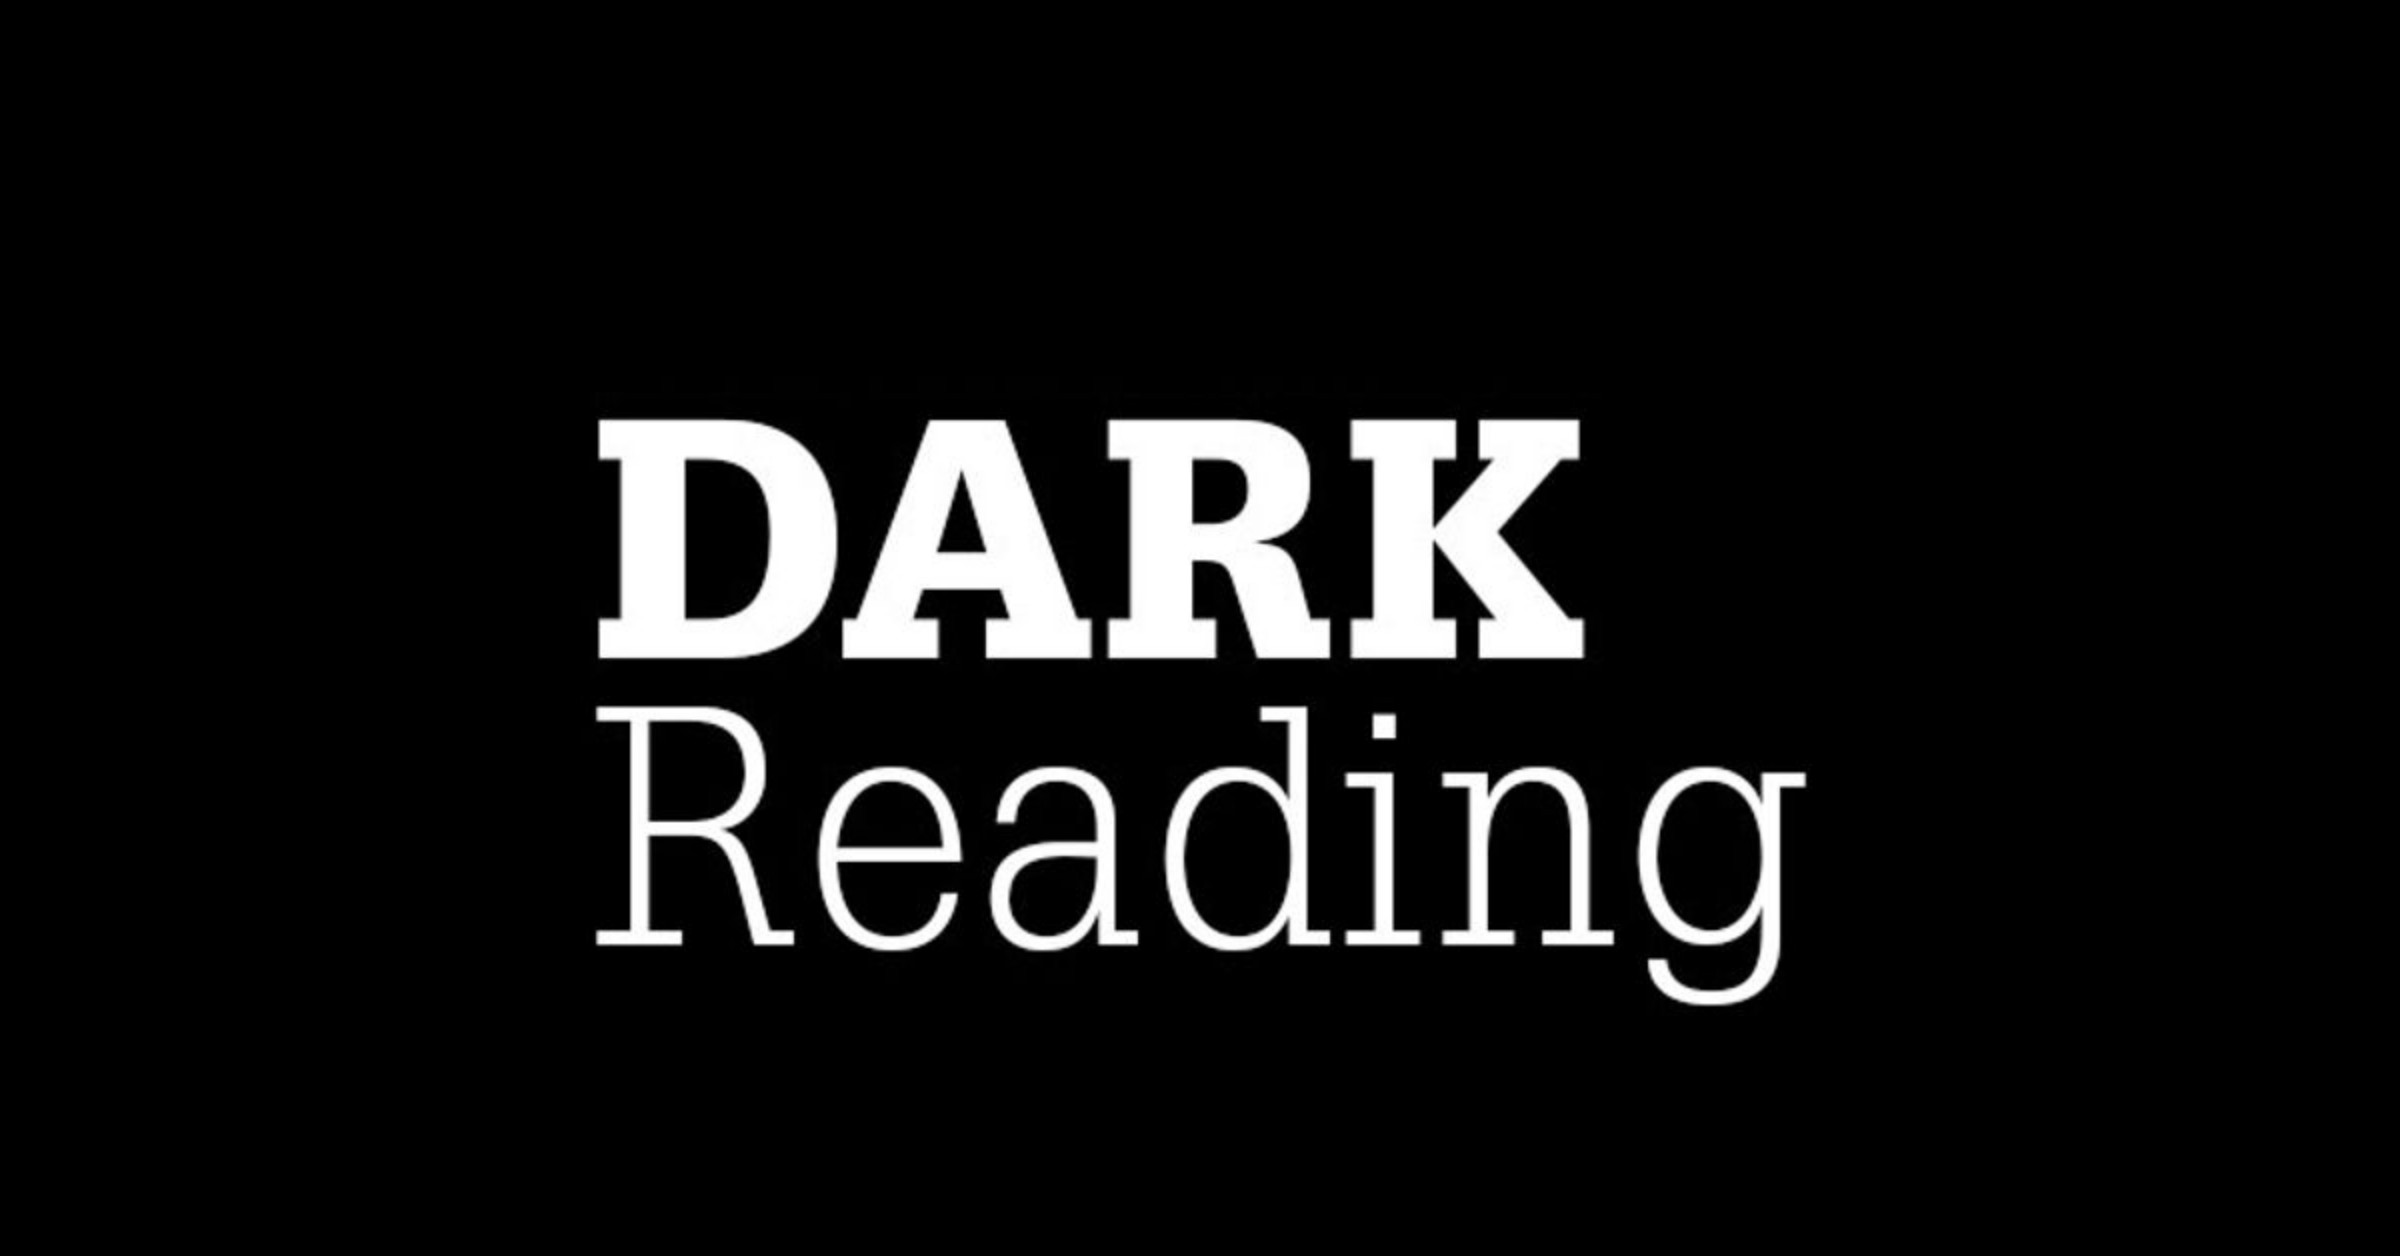 Drack Reading logo